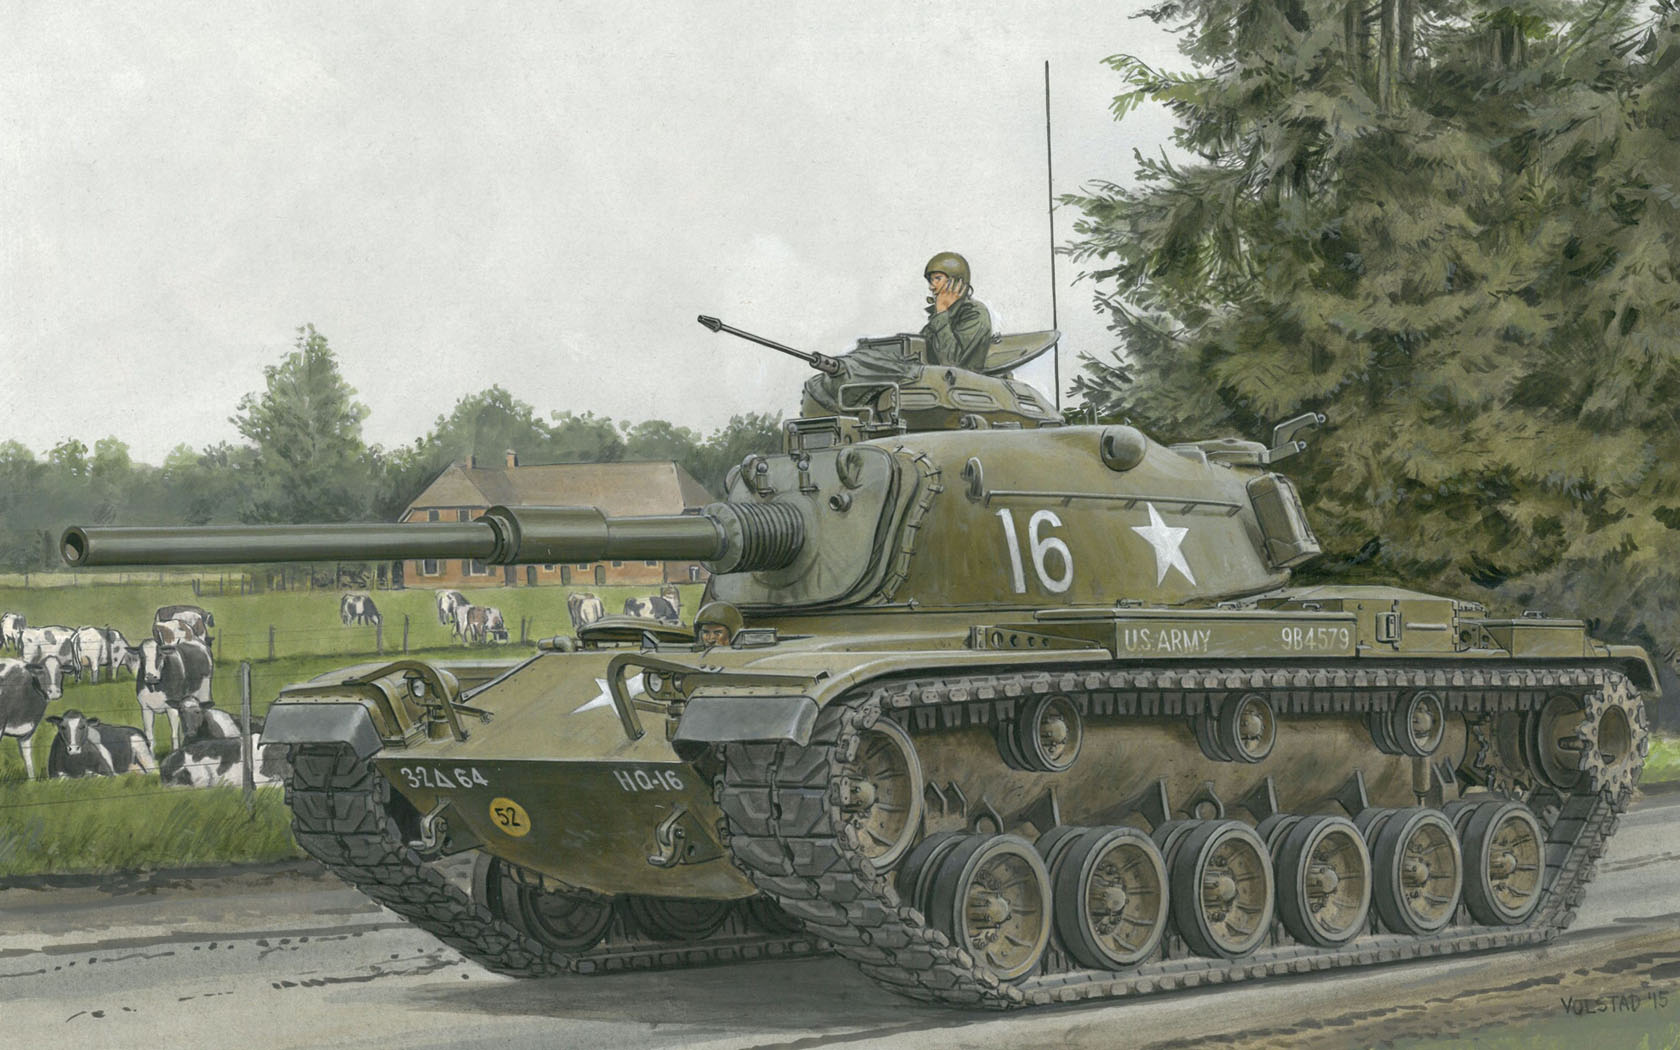 General 1680x1050 tank cow army military military vehicle artwork men soldier helmet animals American tanks